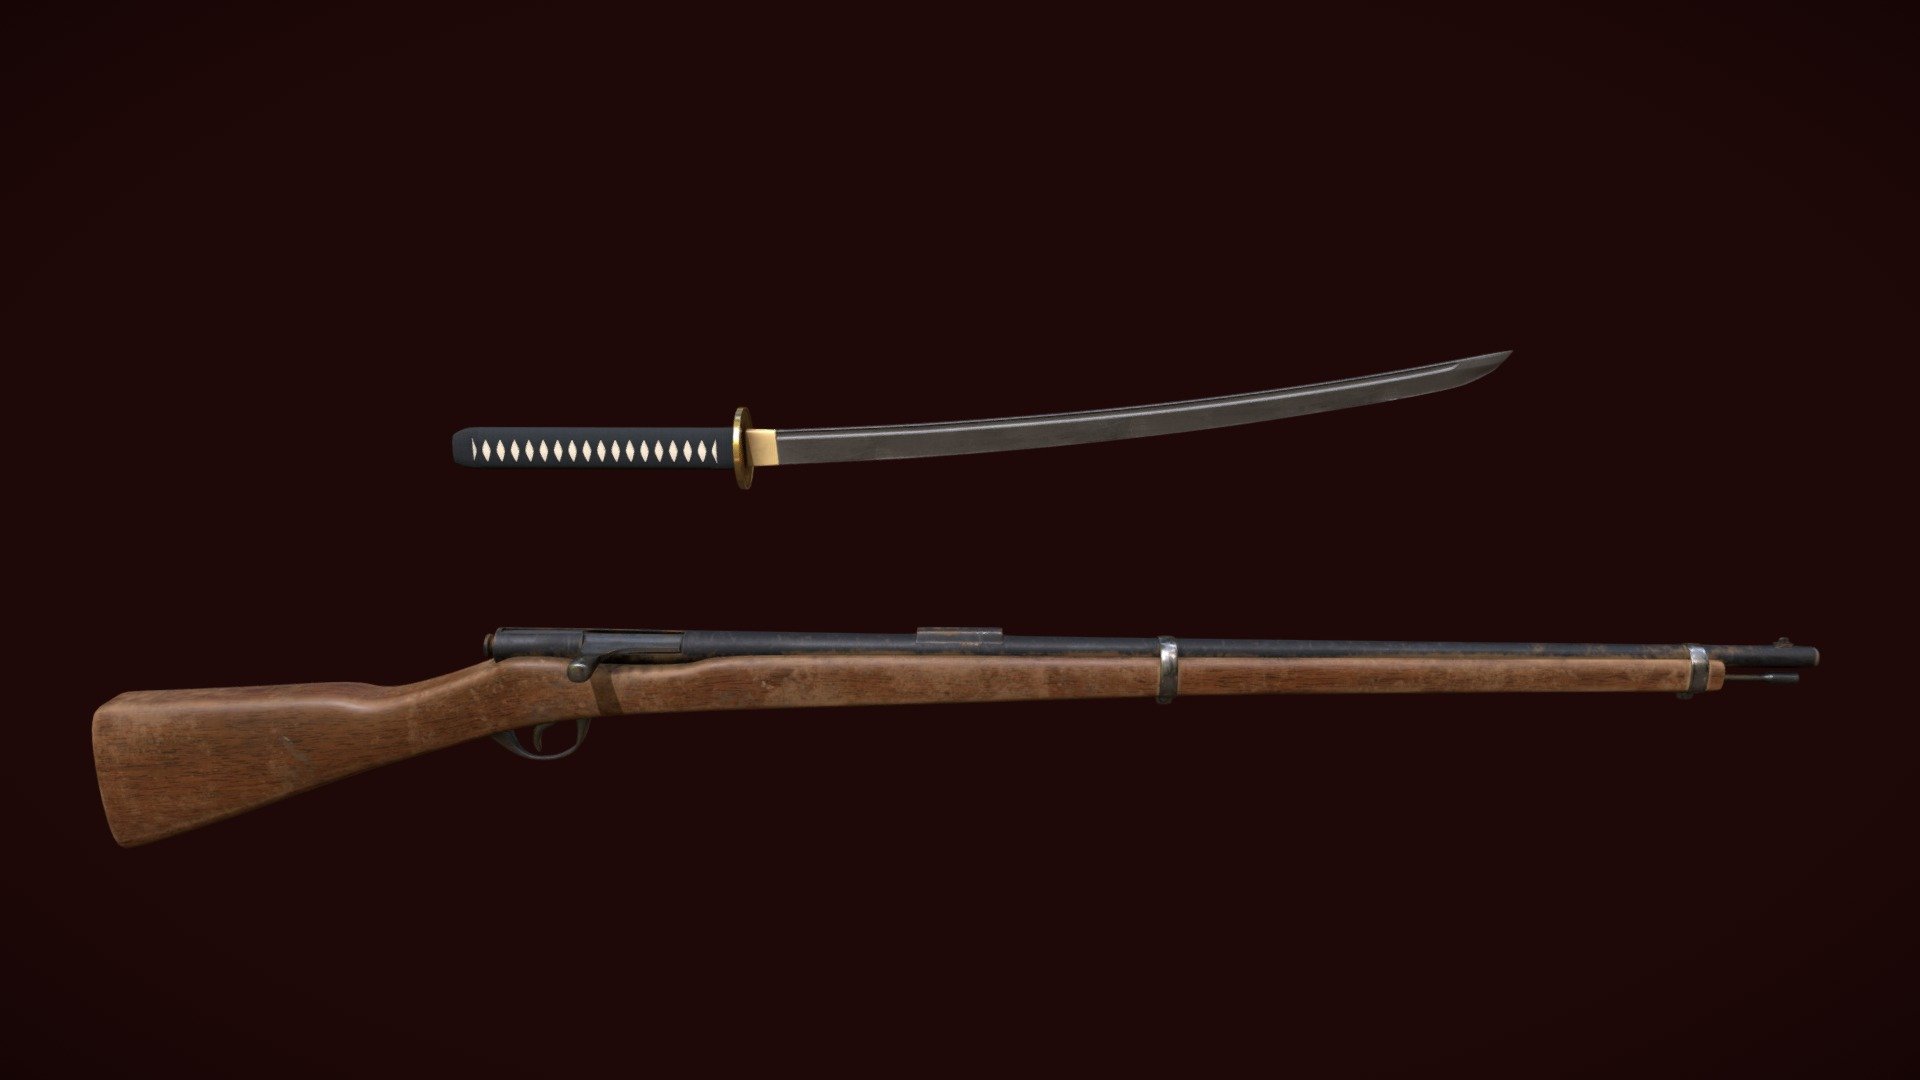 Katana and early Japanese rifle